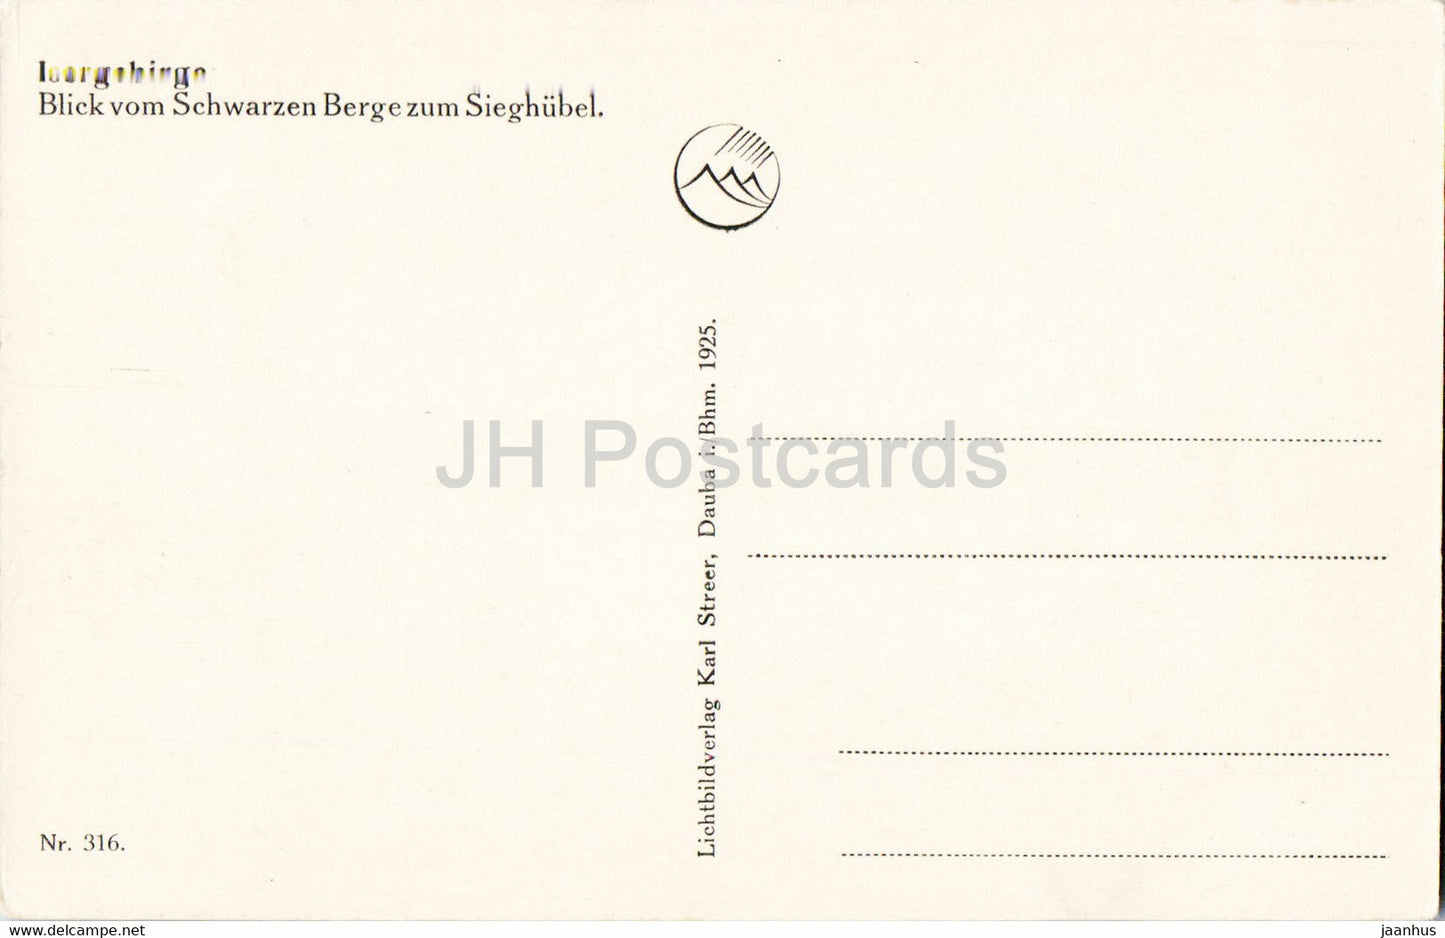 Isergebirge - Jizerske Hory - Blick vom Schwarzen Berge zum Sieghubel - carte postale ancienne - République tchèque - inutilisée